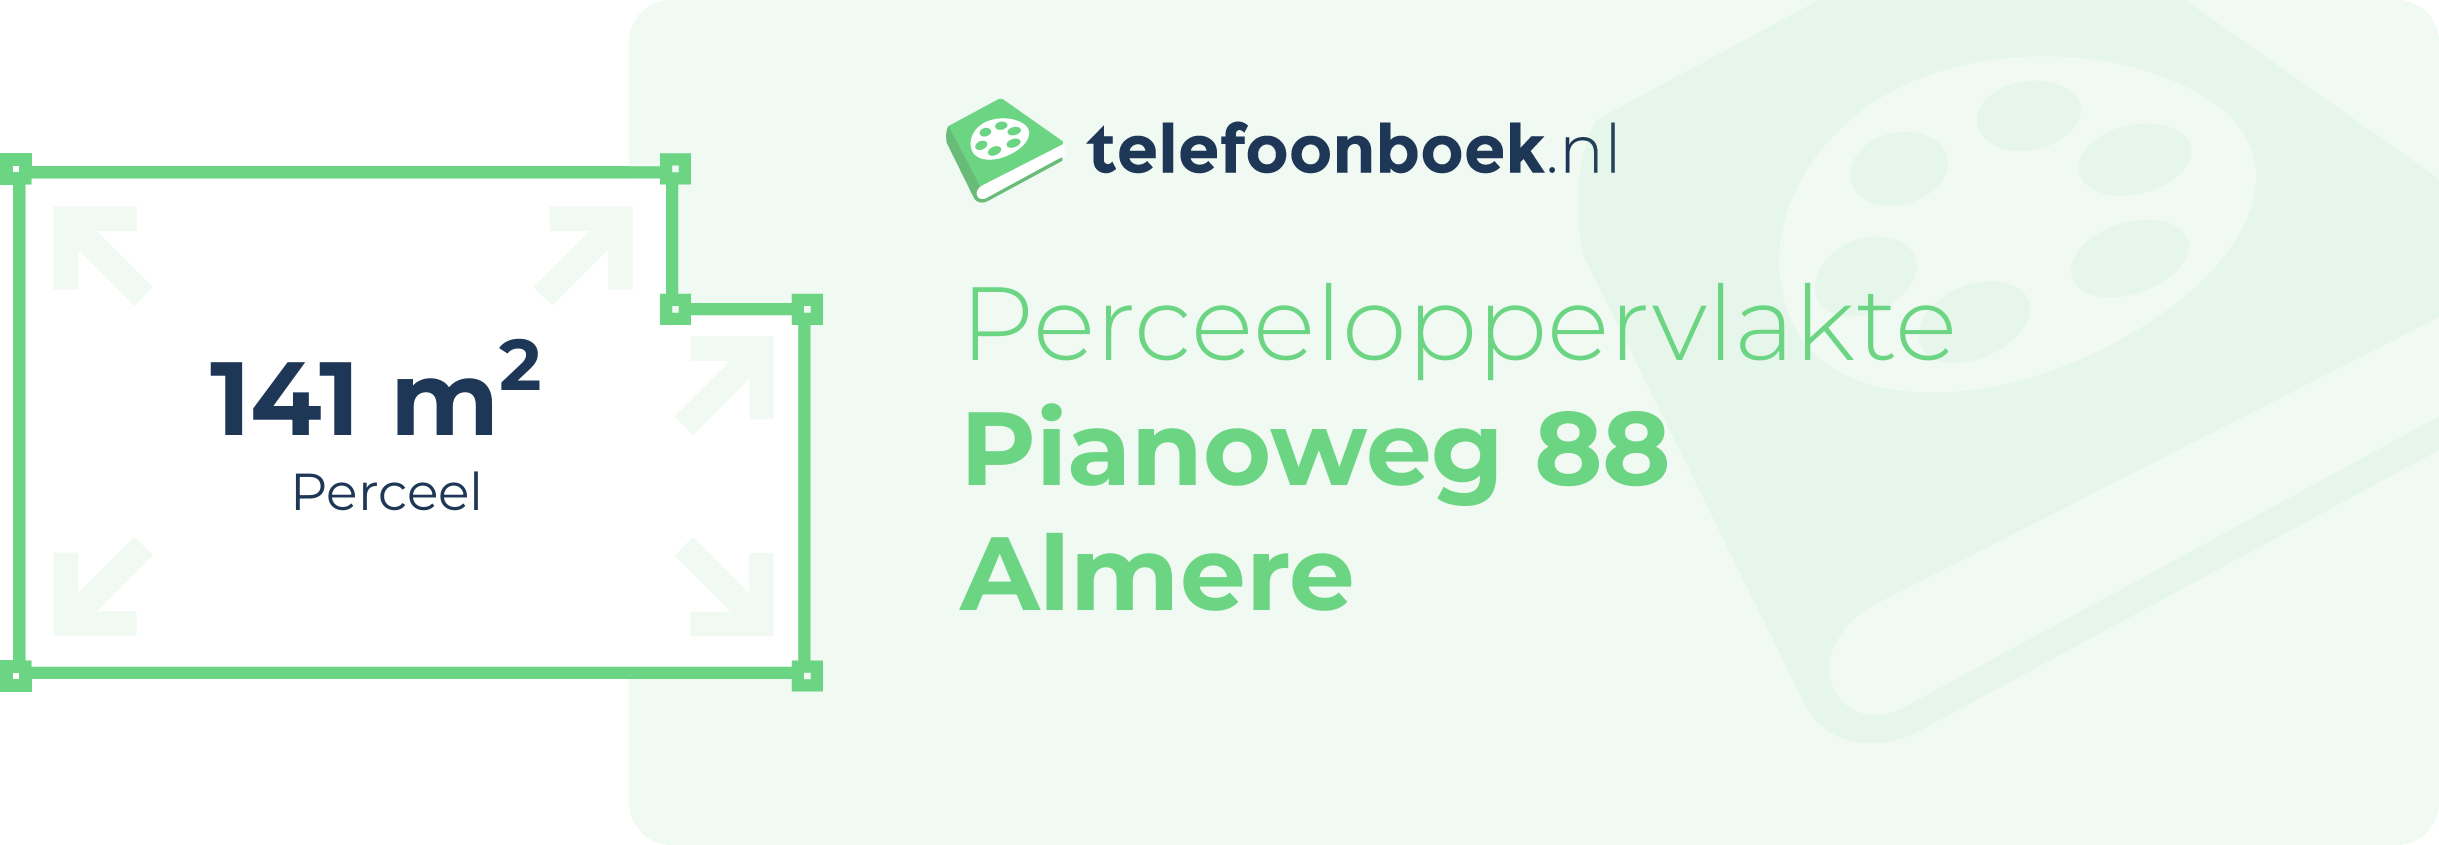 Perceeloppervlakte Pianoweg 88 Almere